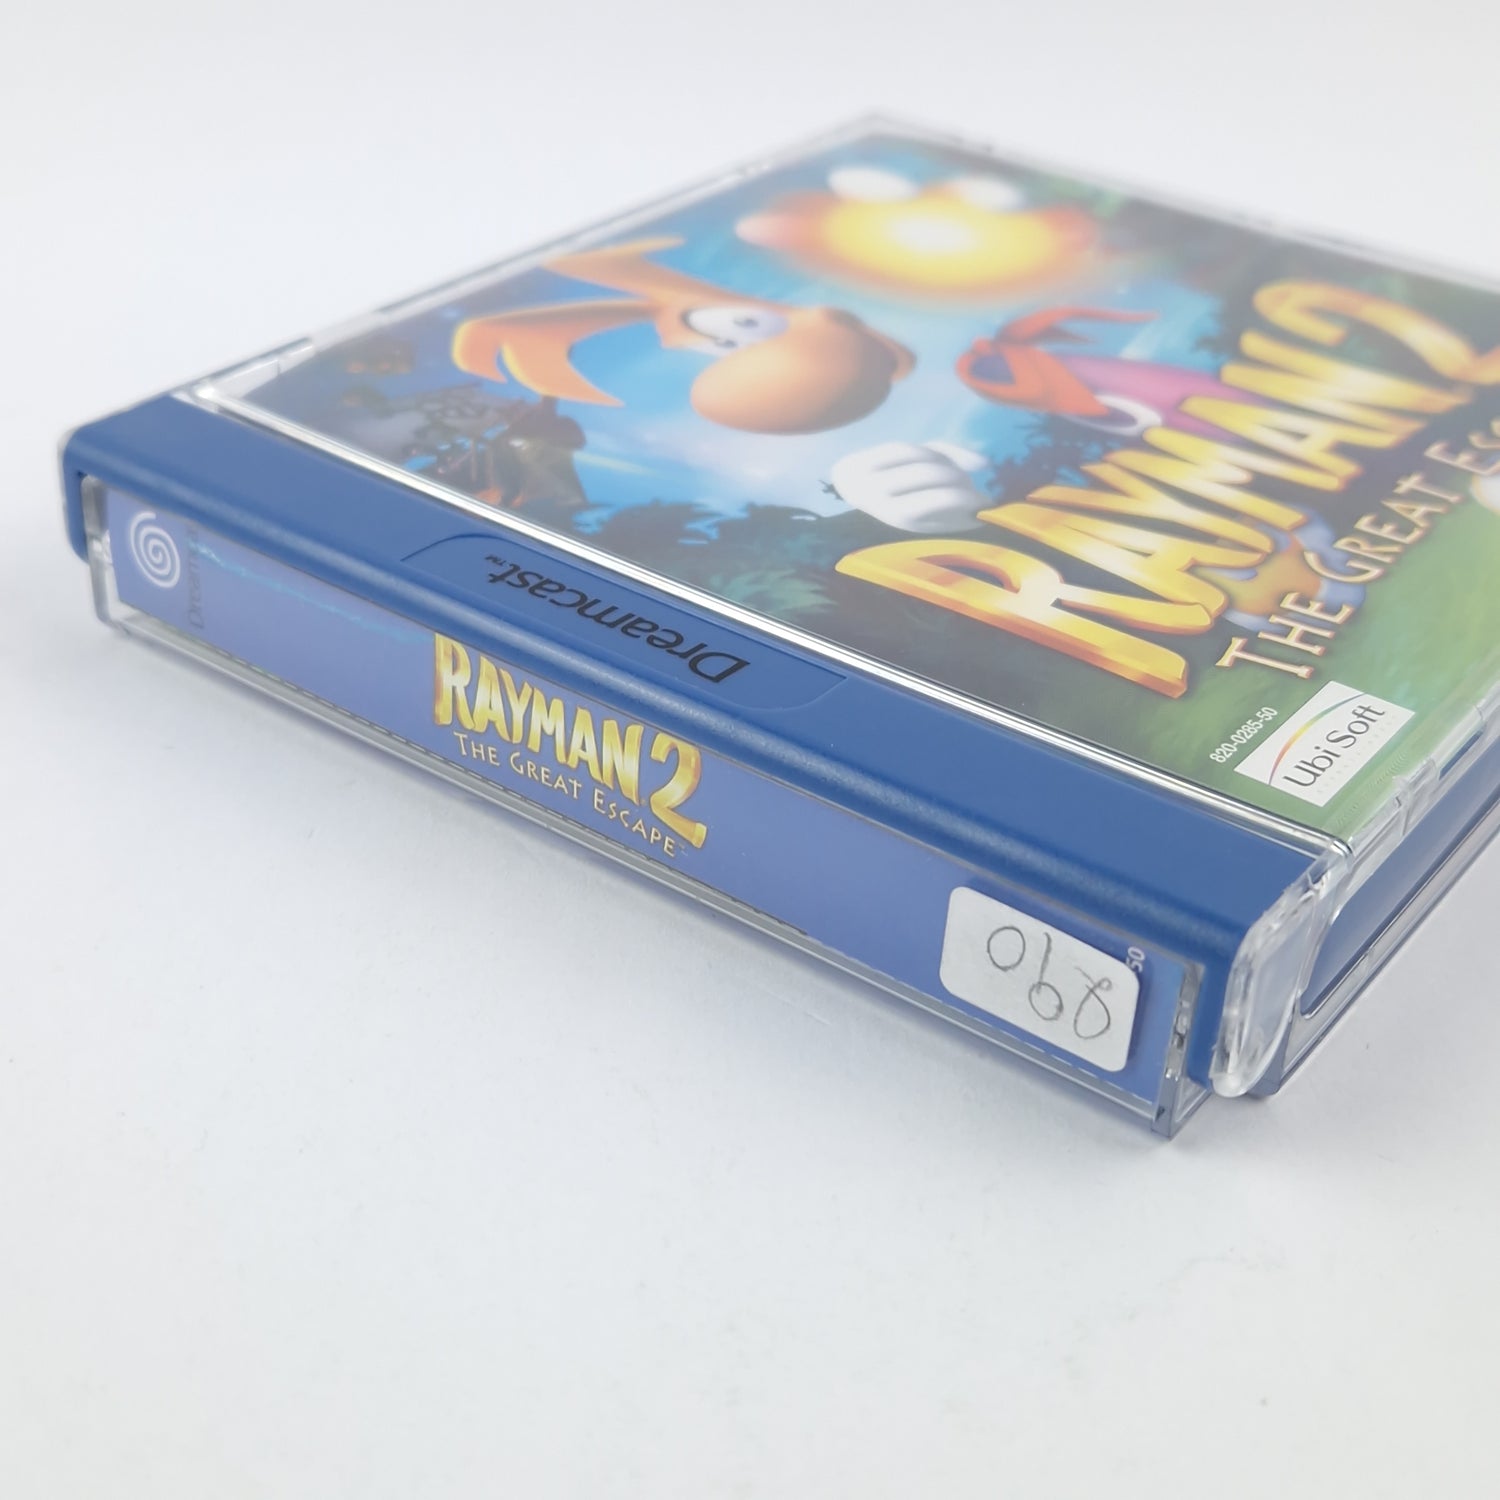 Sega Dreamcast Spiel : Rayman 2 The Great Escape - CD Anleitung OVP / PAL DC